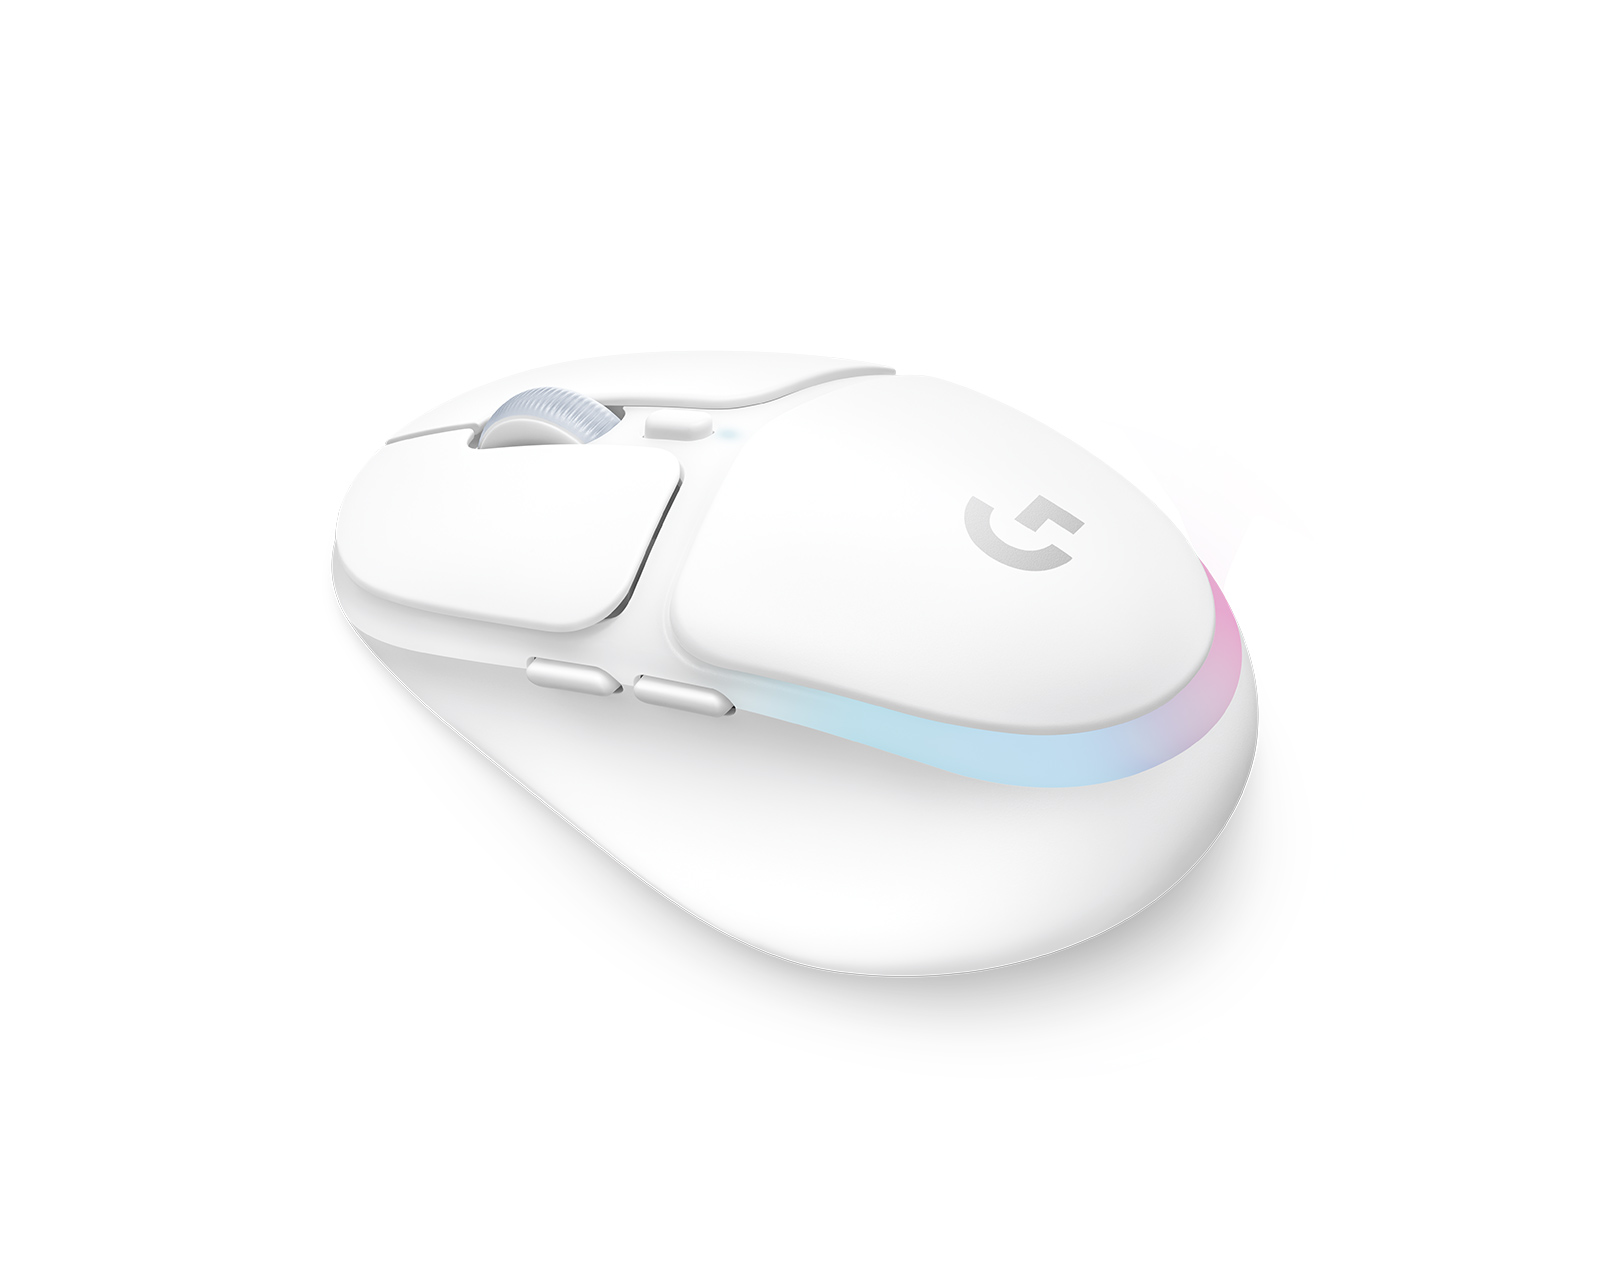 Logitech G705 Lightspeed Wireless Gaming Mouse - White - MaxGaming.com